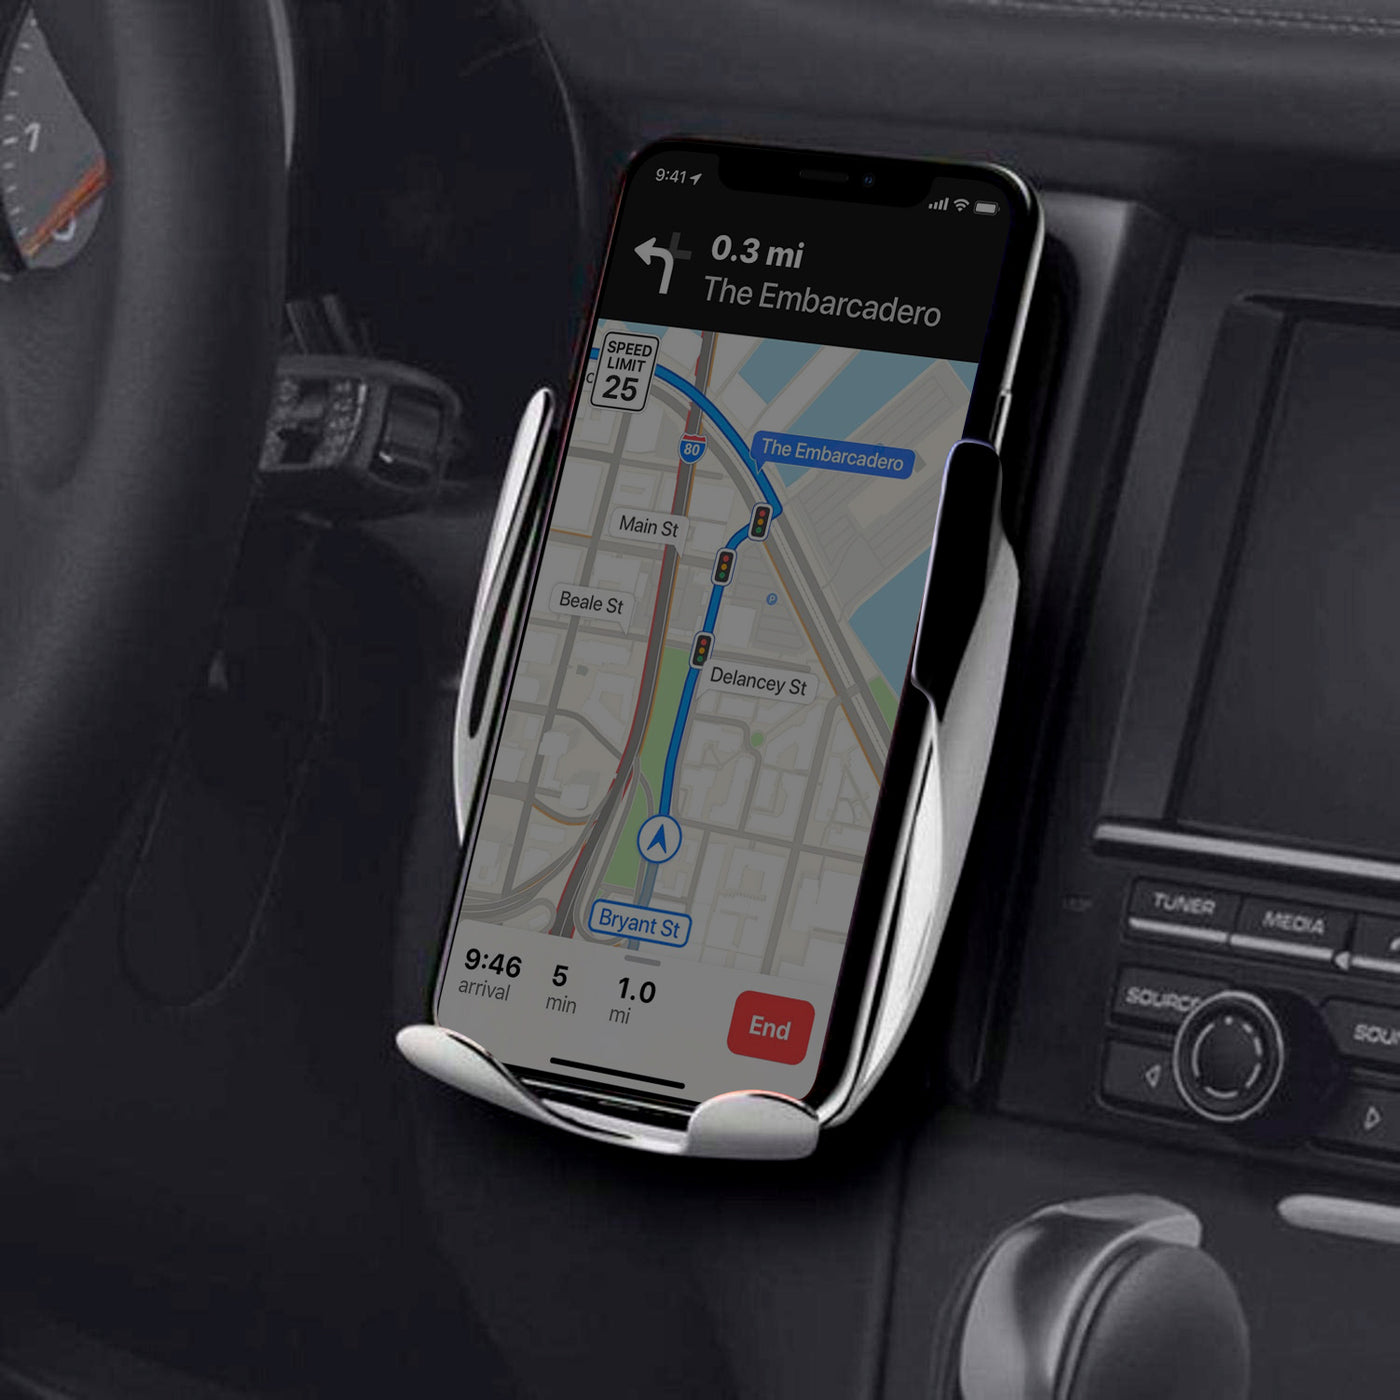 Phone Mate Wireless Car Mount Charger Smart Sensor